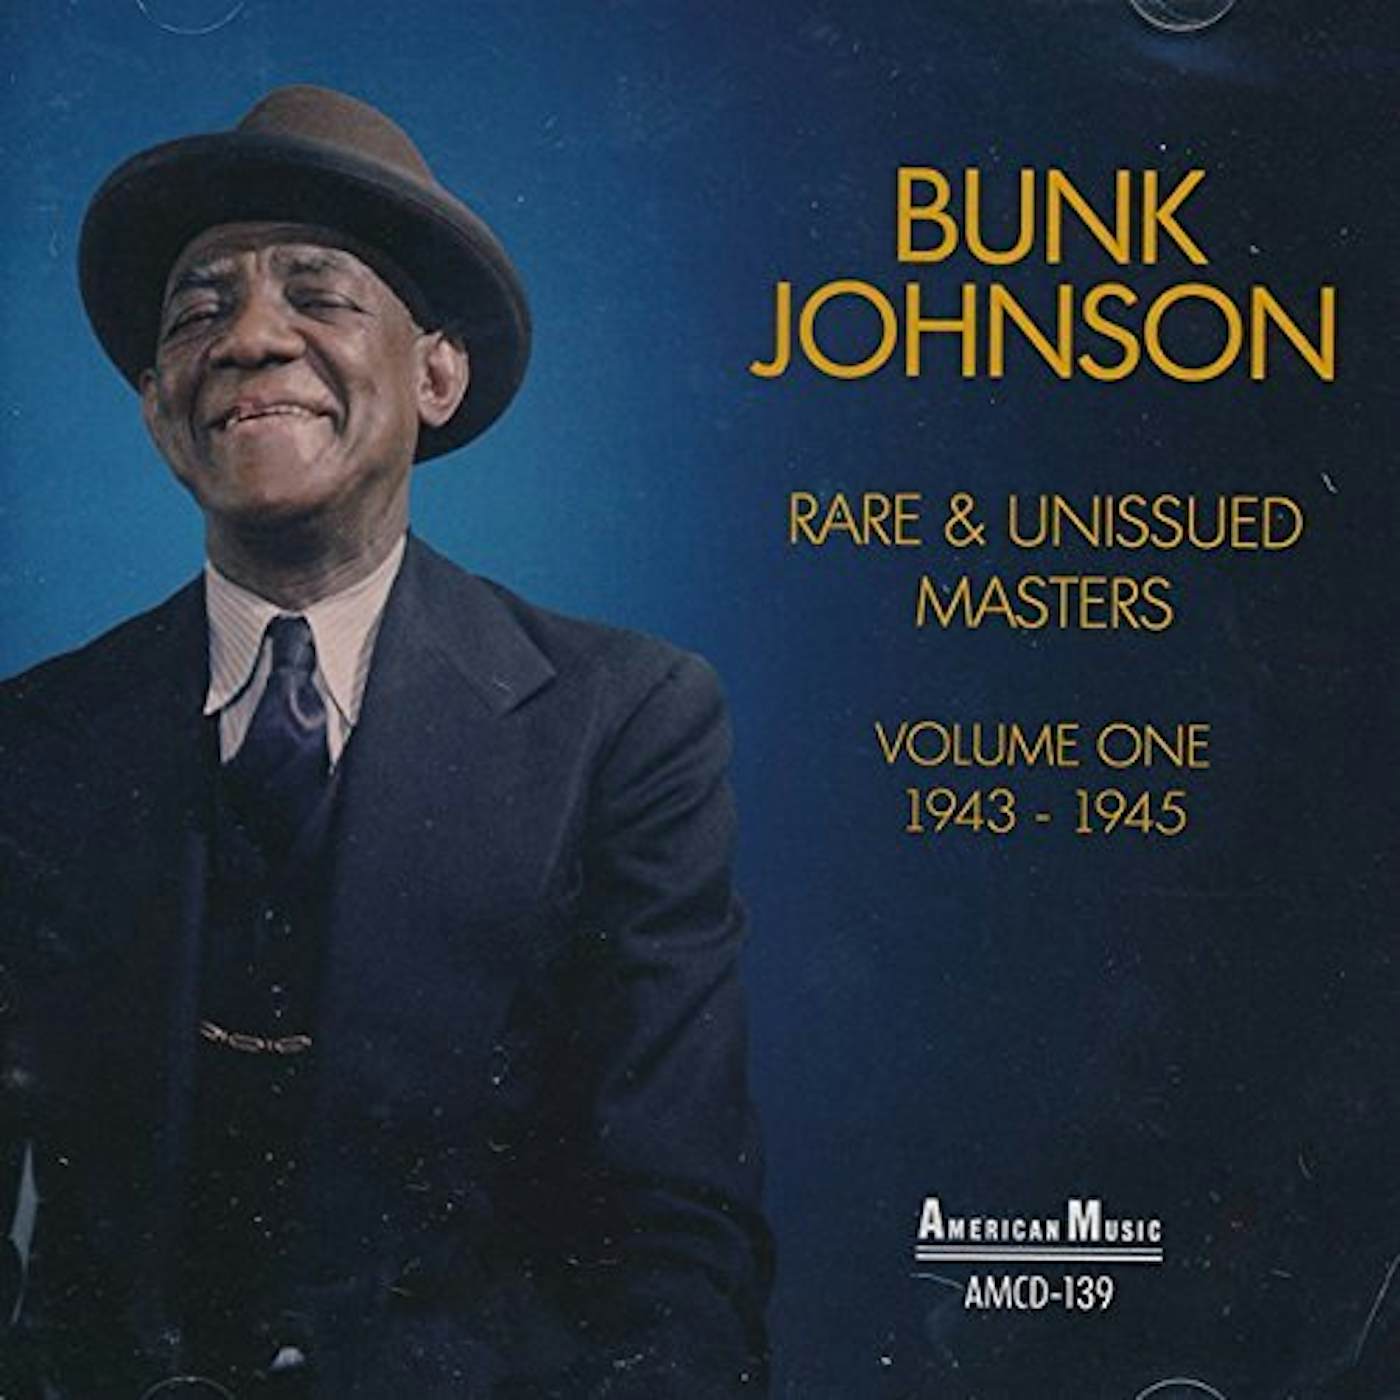 Bunk Johnson RARE & UNISSUED MASTERS VOL 1 1943-1945 CD